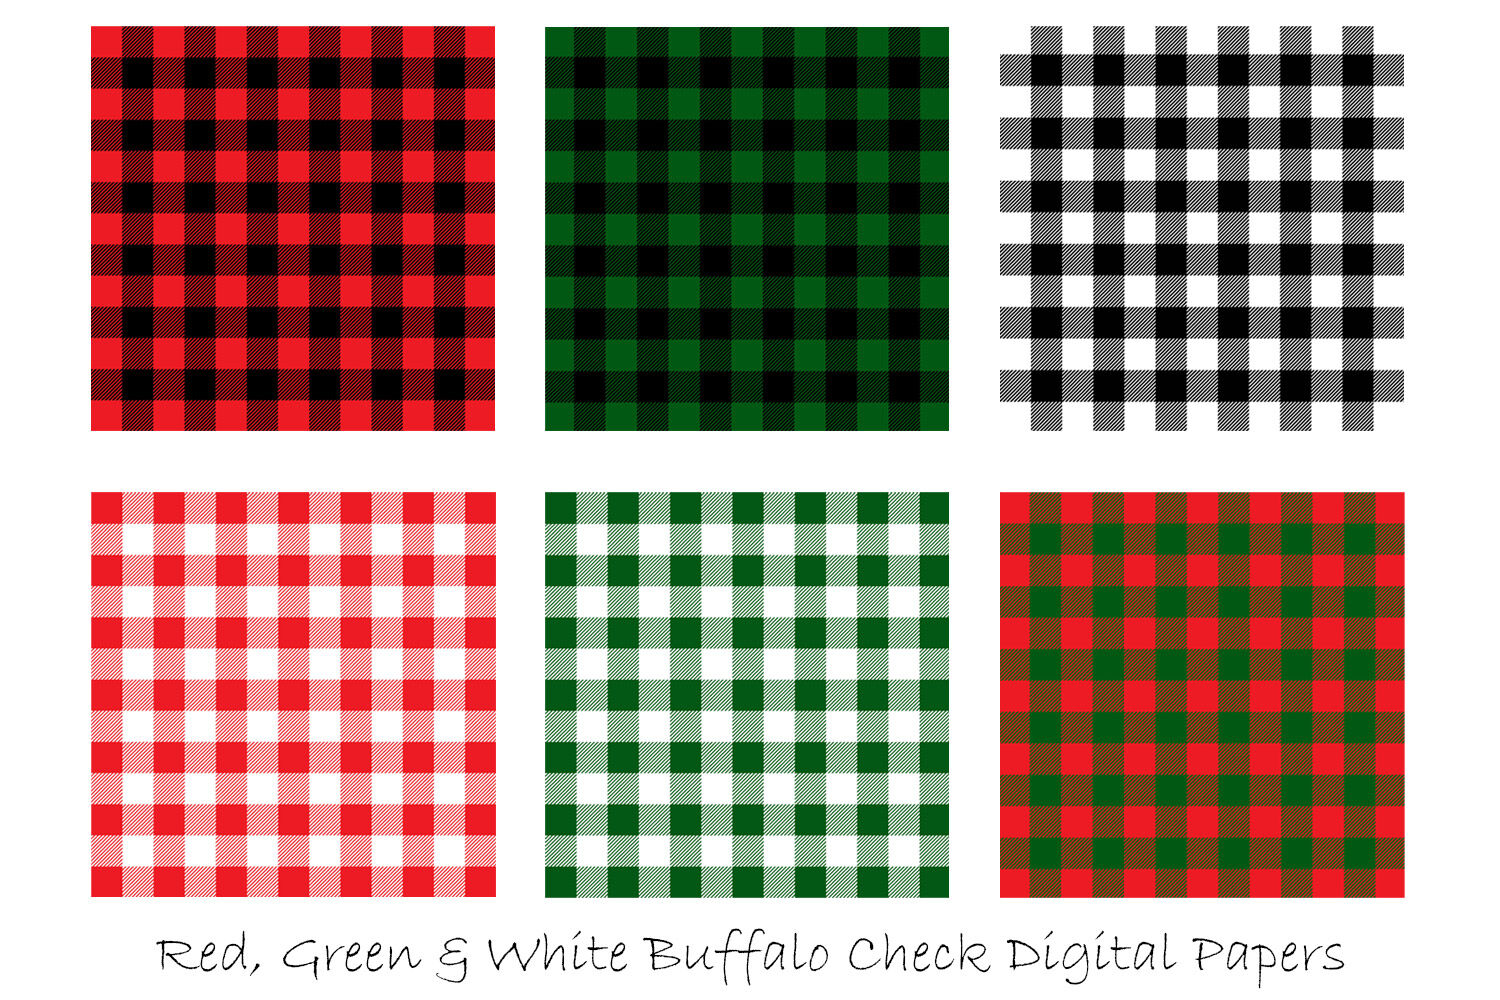 9. "Christmas Plaid Nail Design with Black Polish" - wide 7